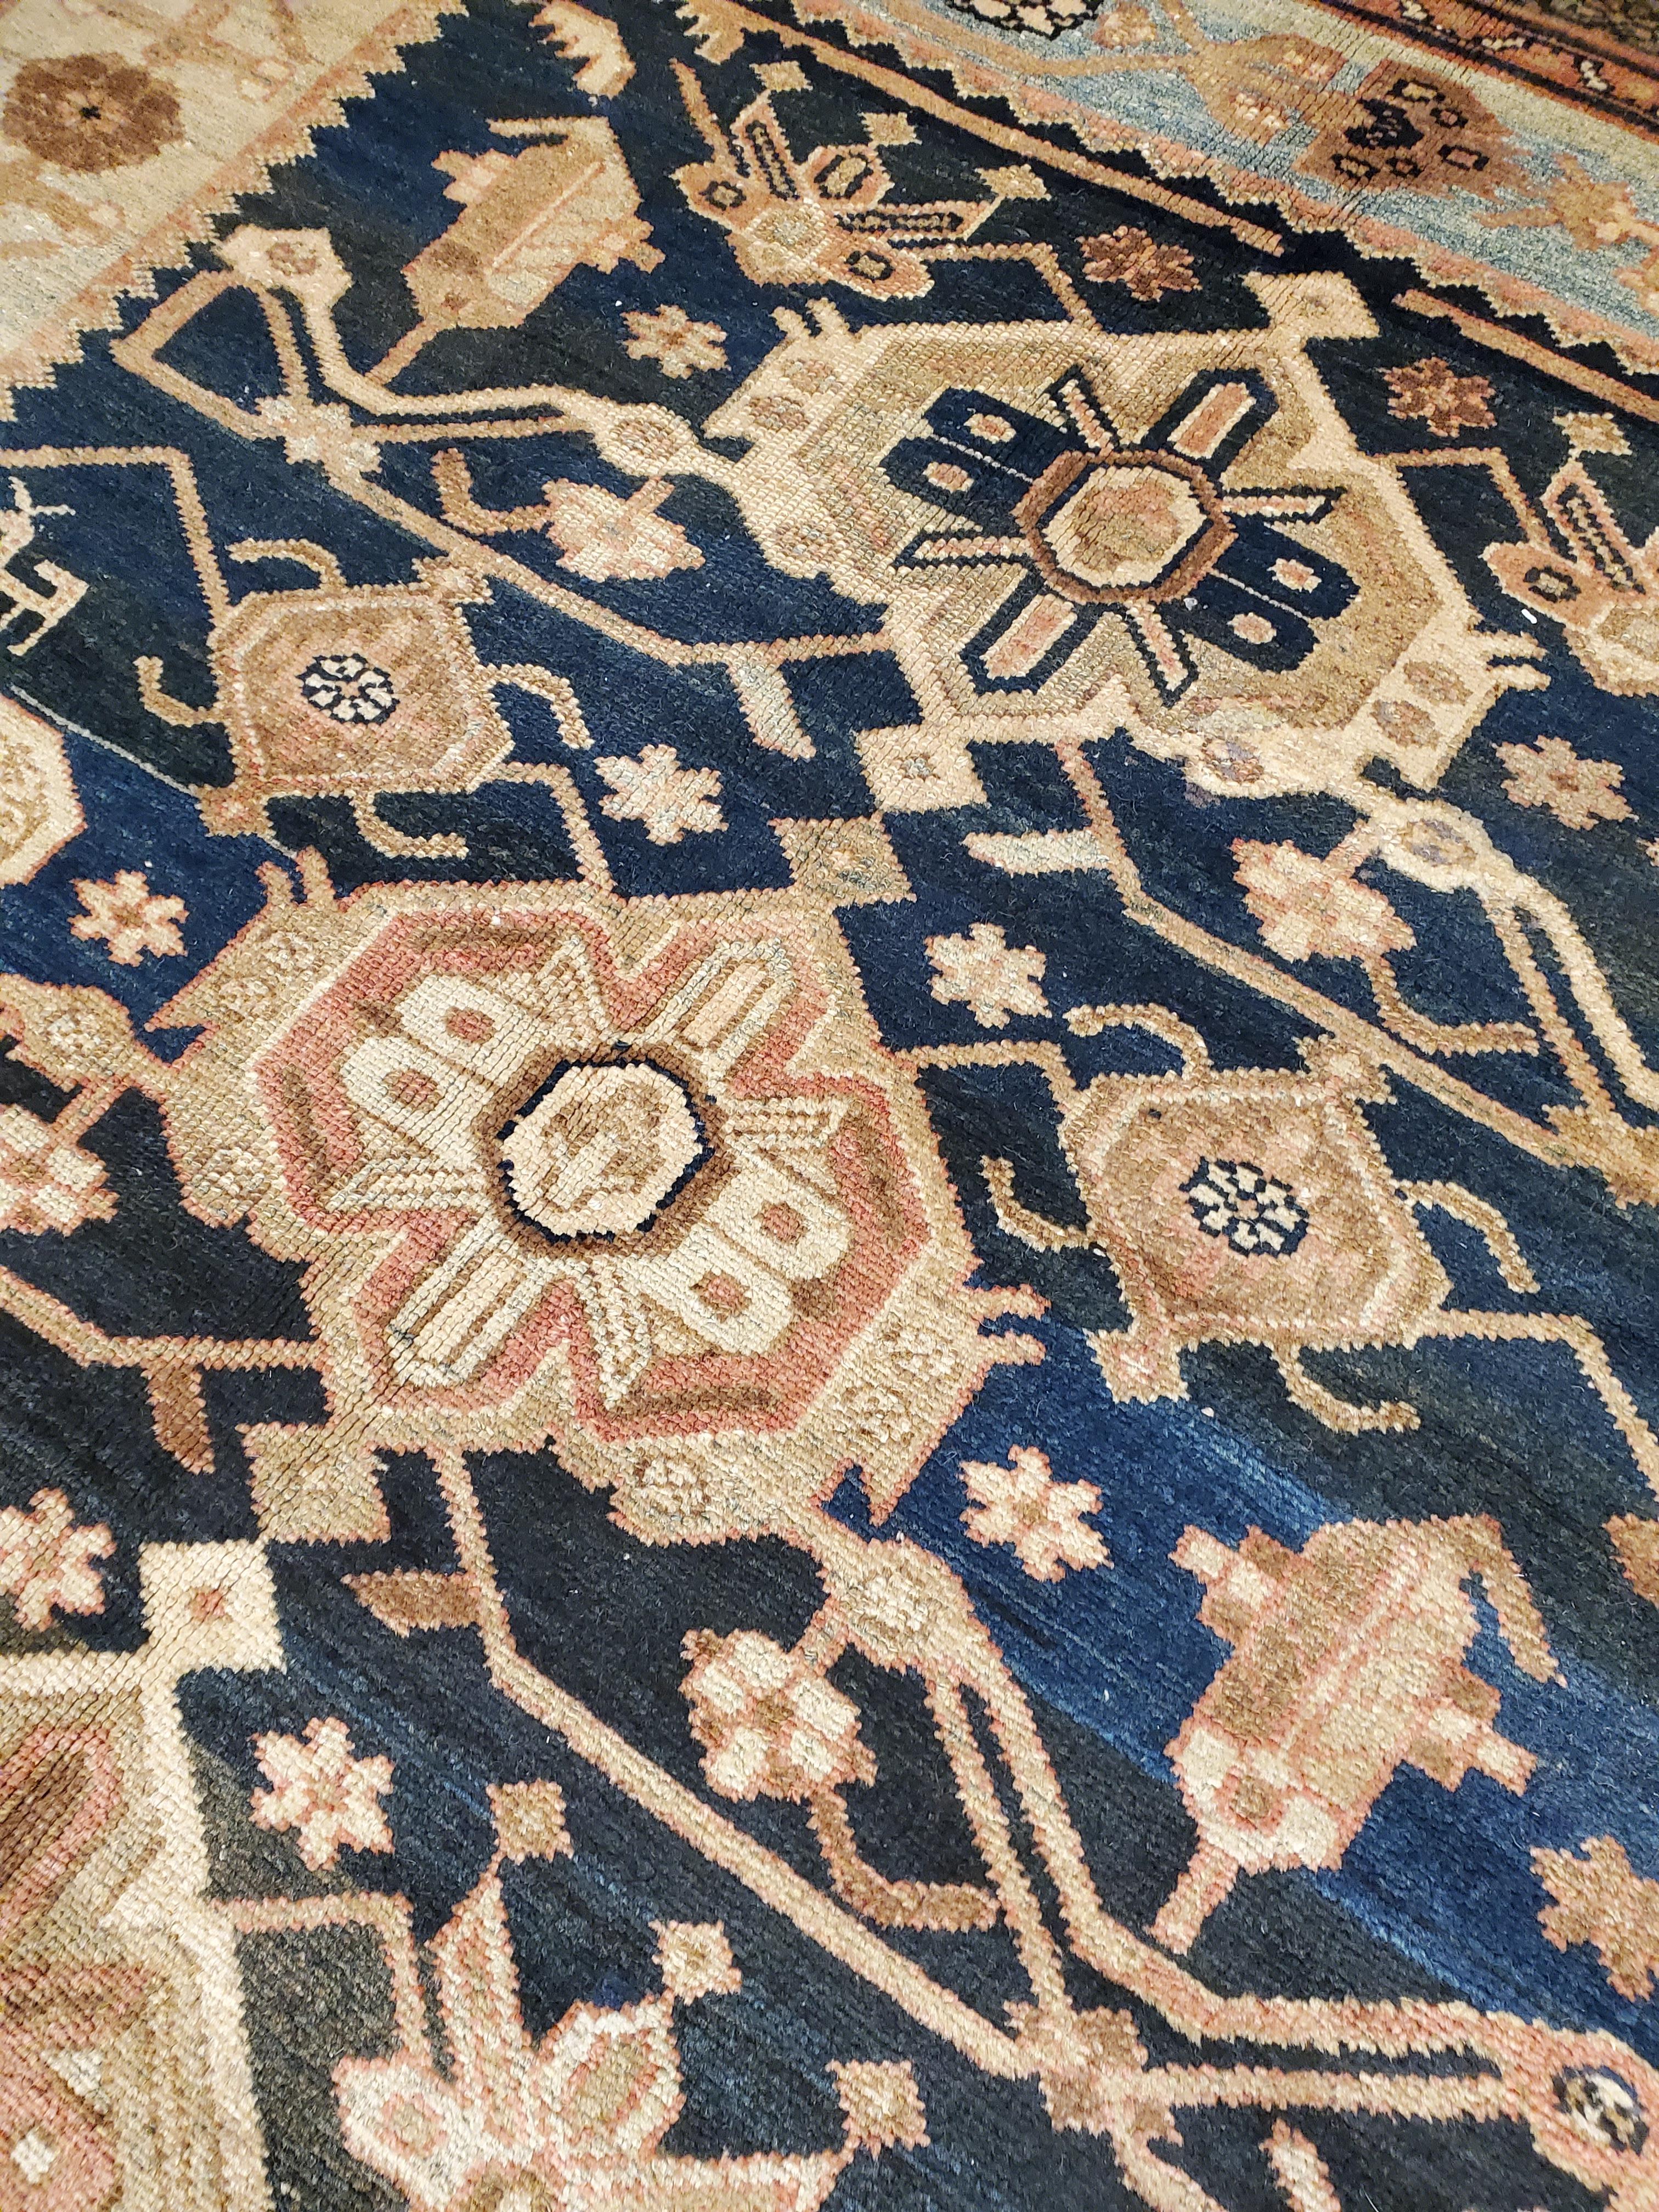 20th Century Antique Persian Malayer Carpet, Handmade Oriental Rugs, Navy, Orange, Cream For Sale